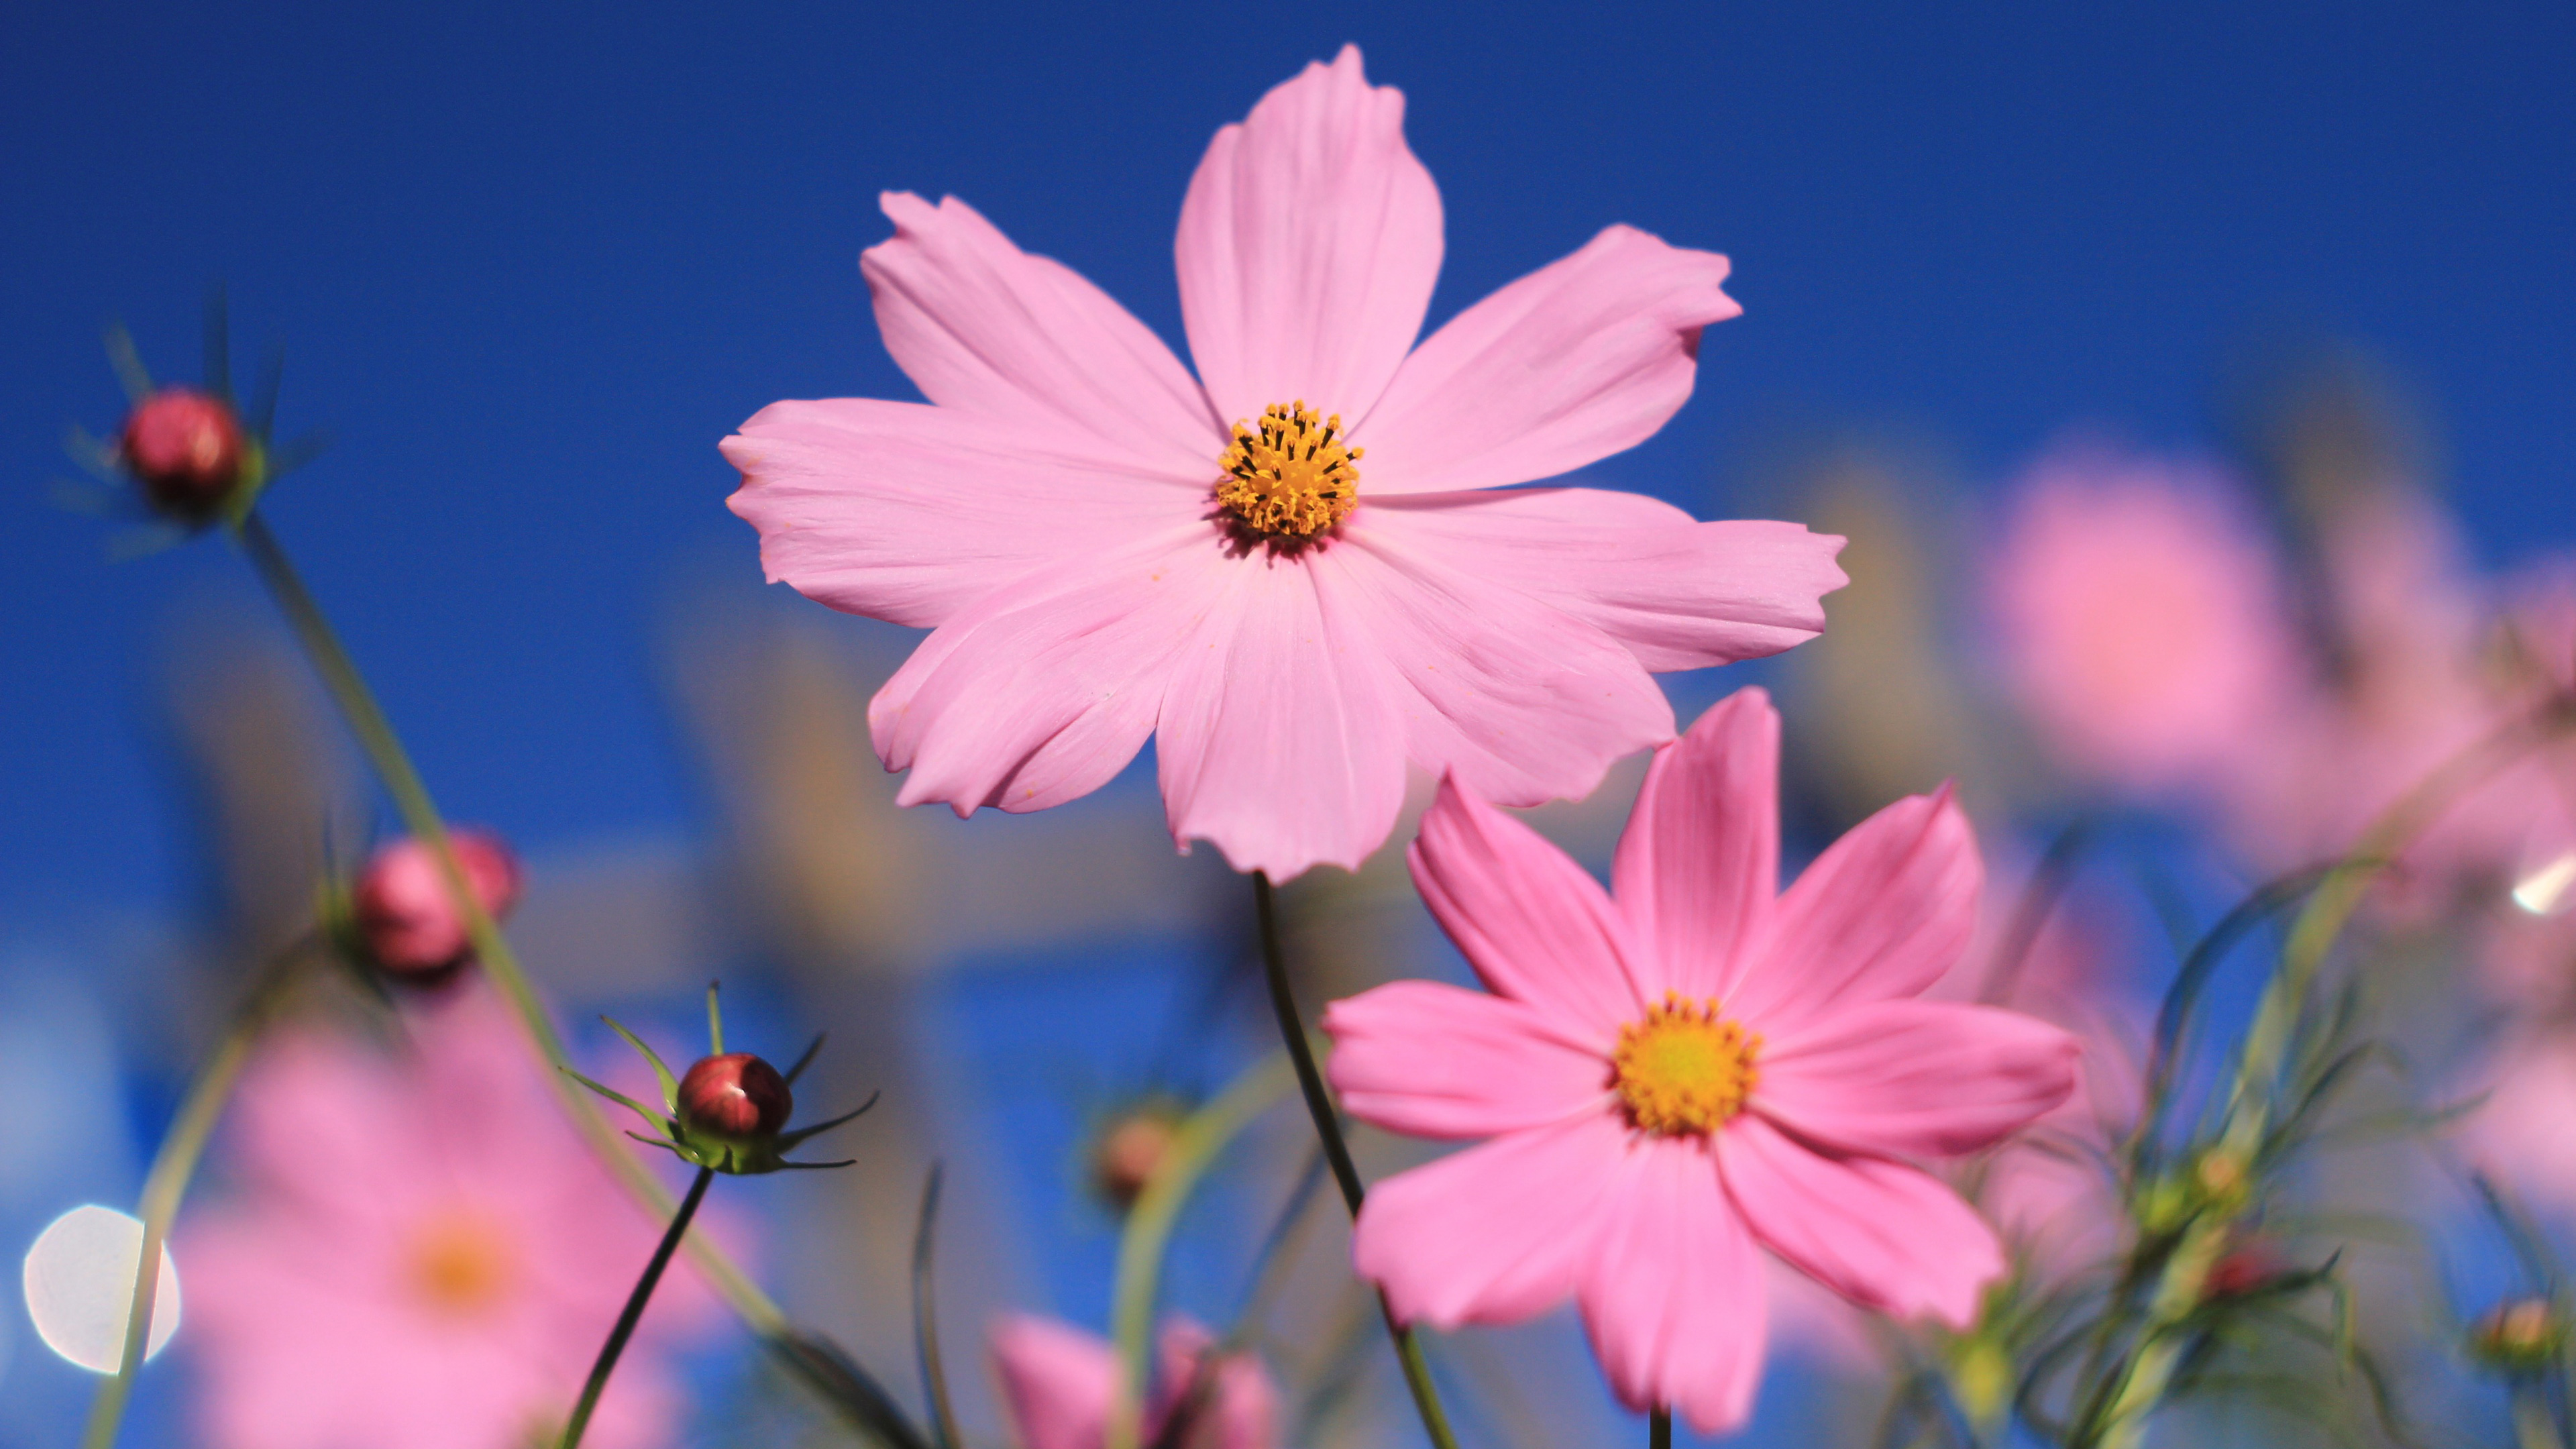 Pink Cosmos Flower, HD Flowers, 4k Wallpaper, Image, Background